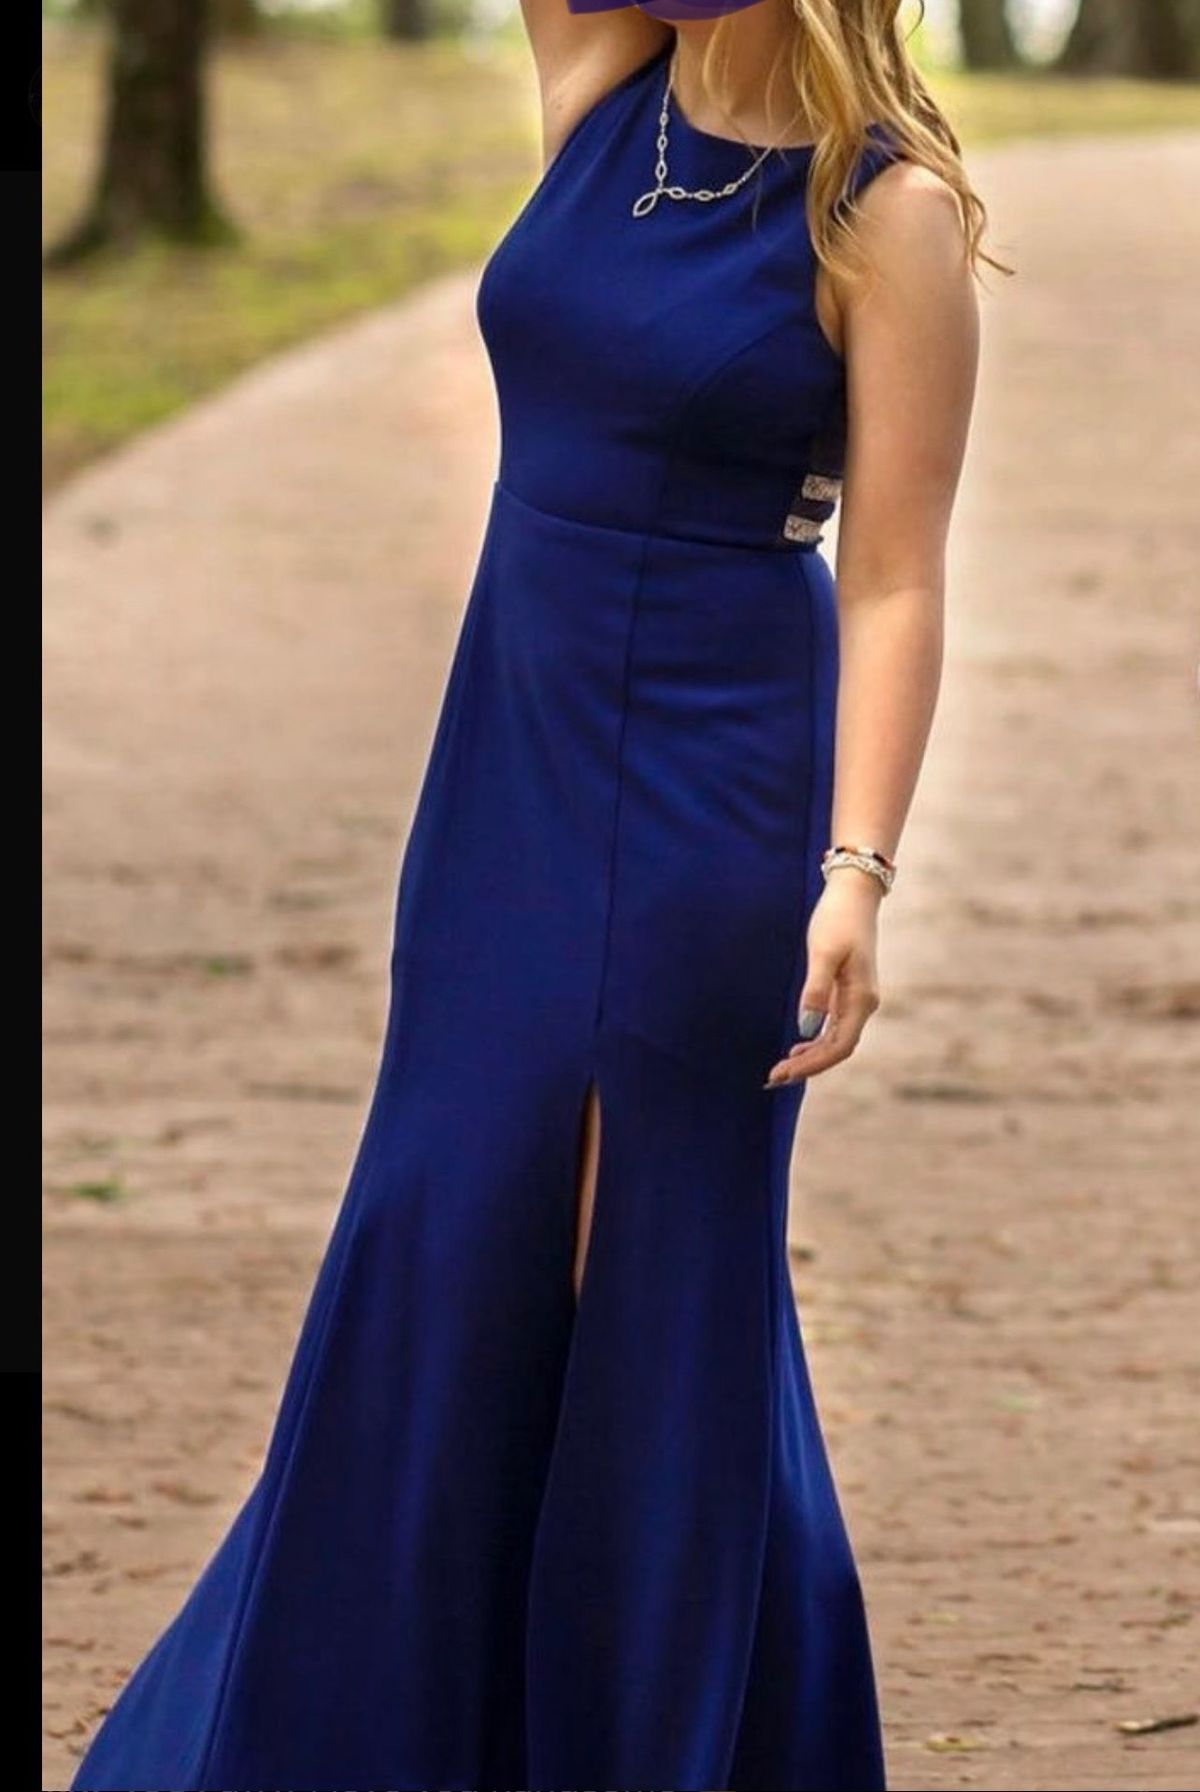 Size 4 Prom Royal Blue Side Slit Dress on Queenly